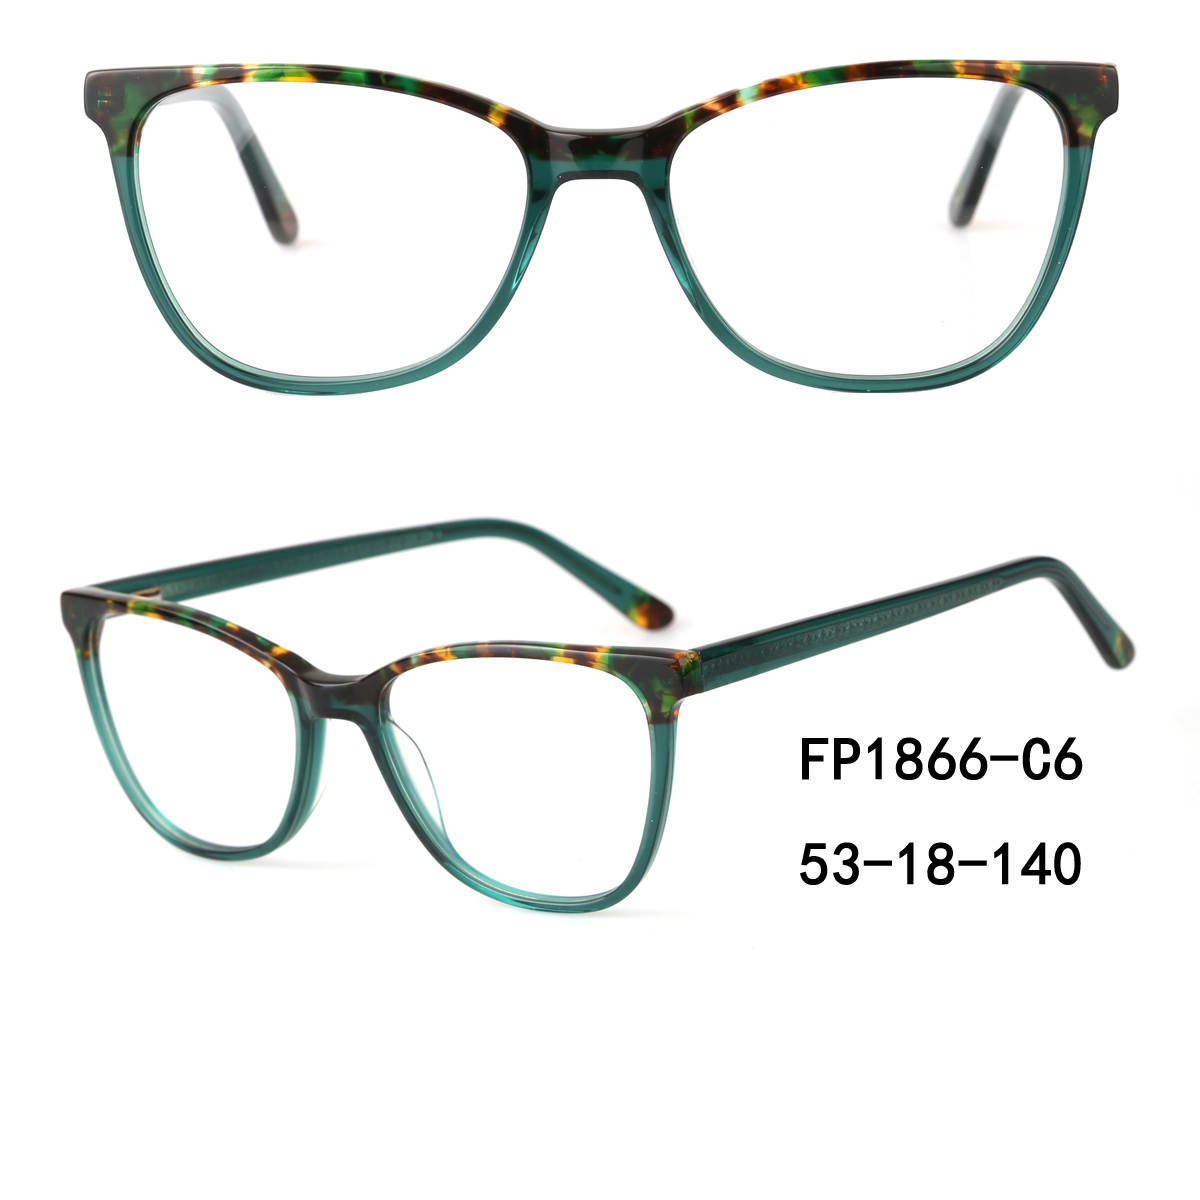 Popeyewear Custom Acetate Spectacle Sunglasses Frames For Sale